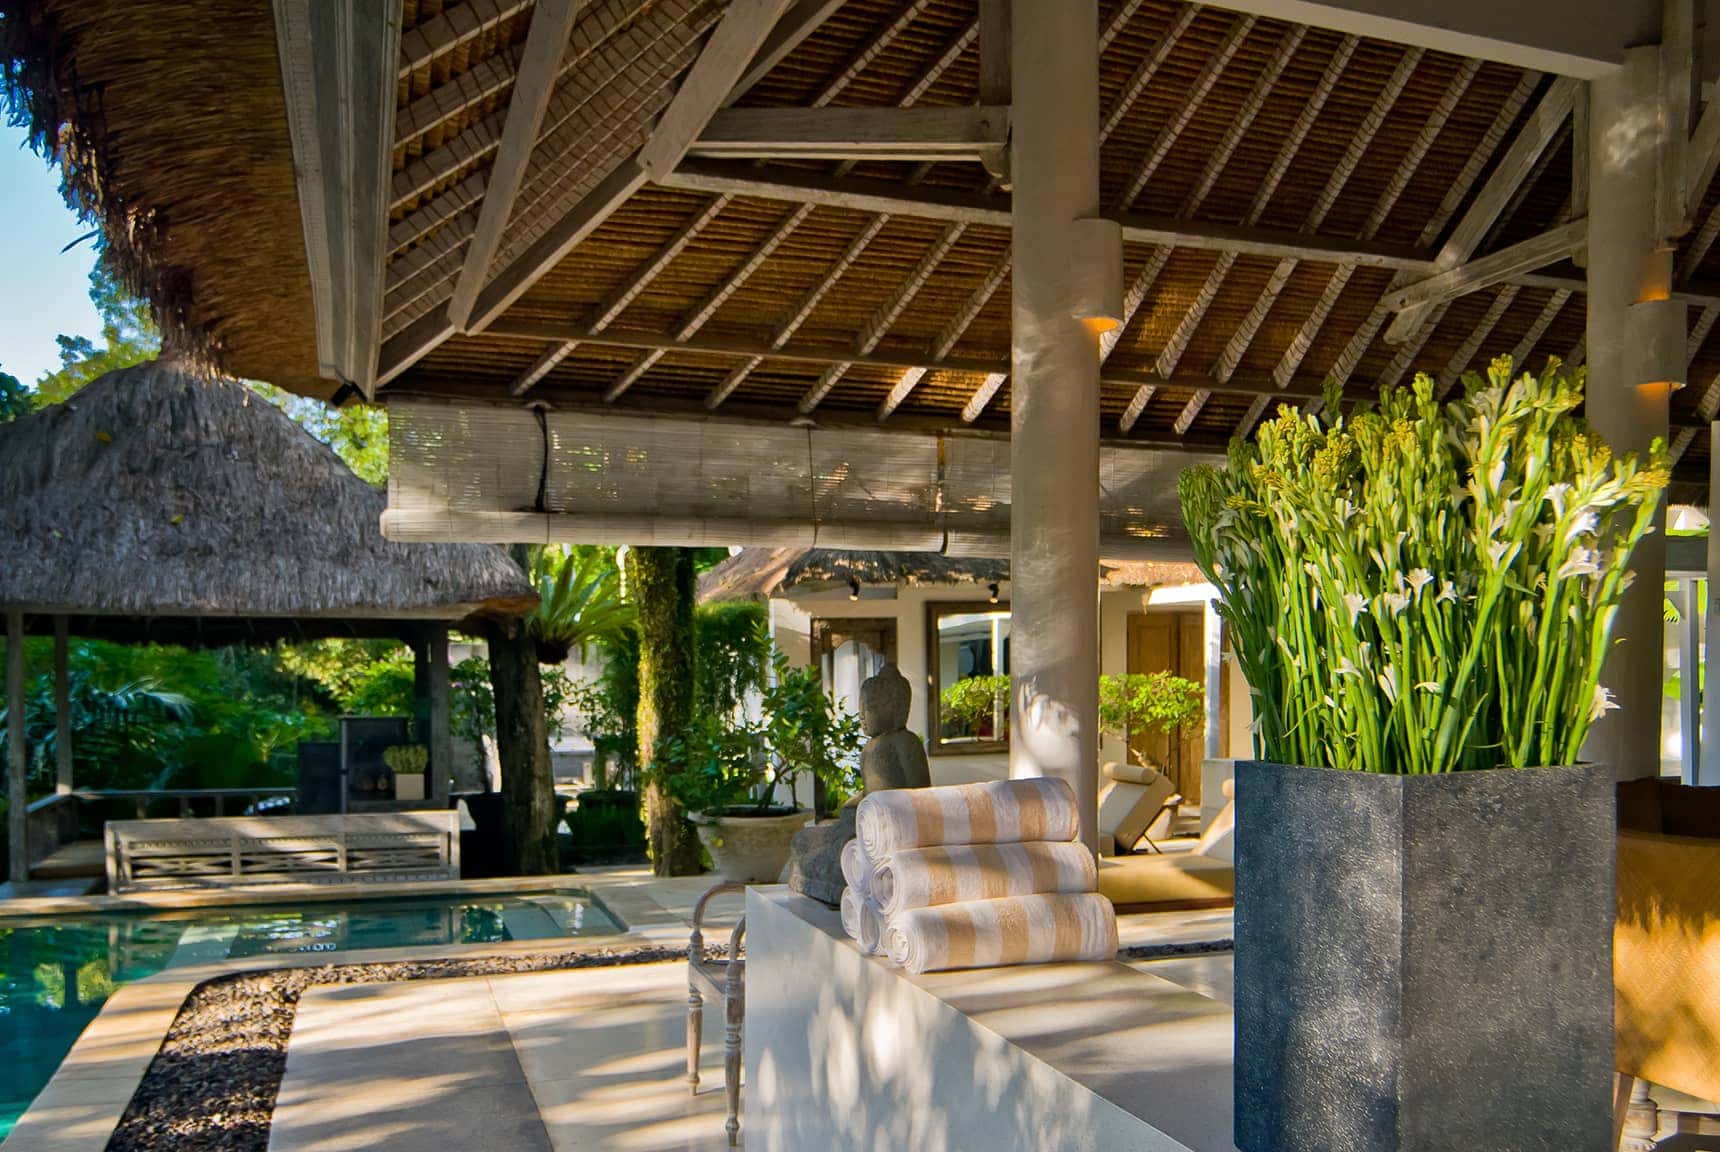 Villa Sungai - Canggu, Bali Indonesia (Bali villa photography by master photographer Rick Carmichael of LuxViz)